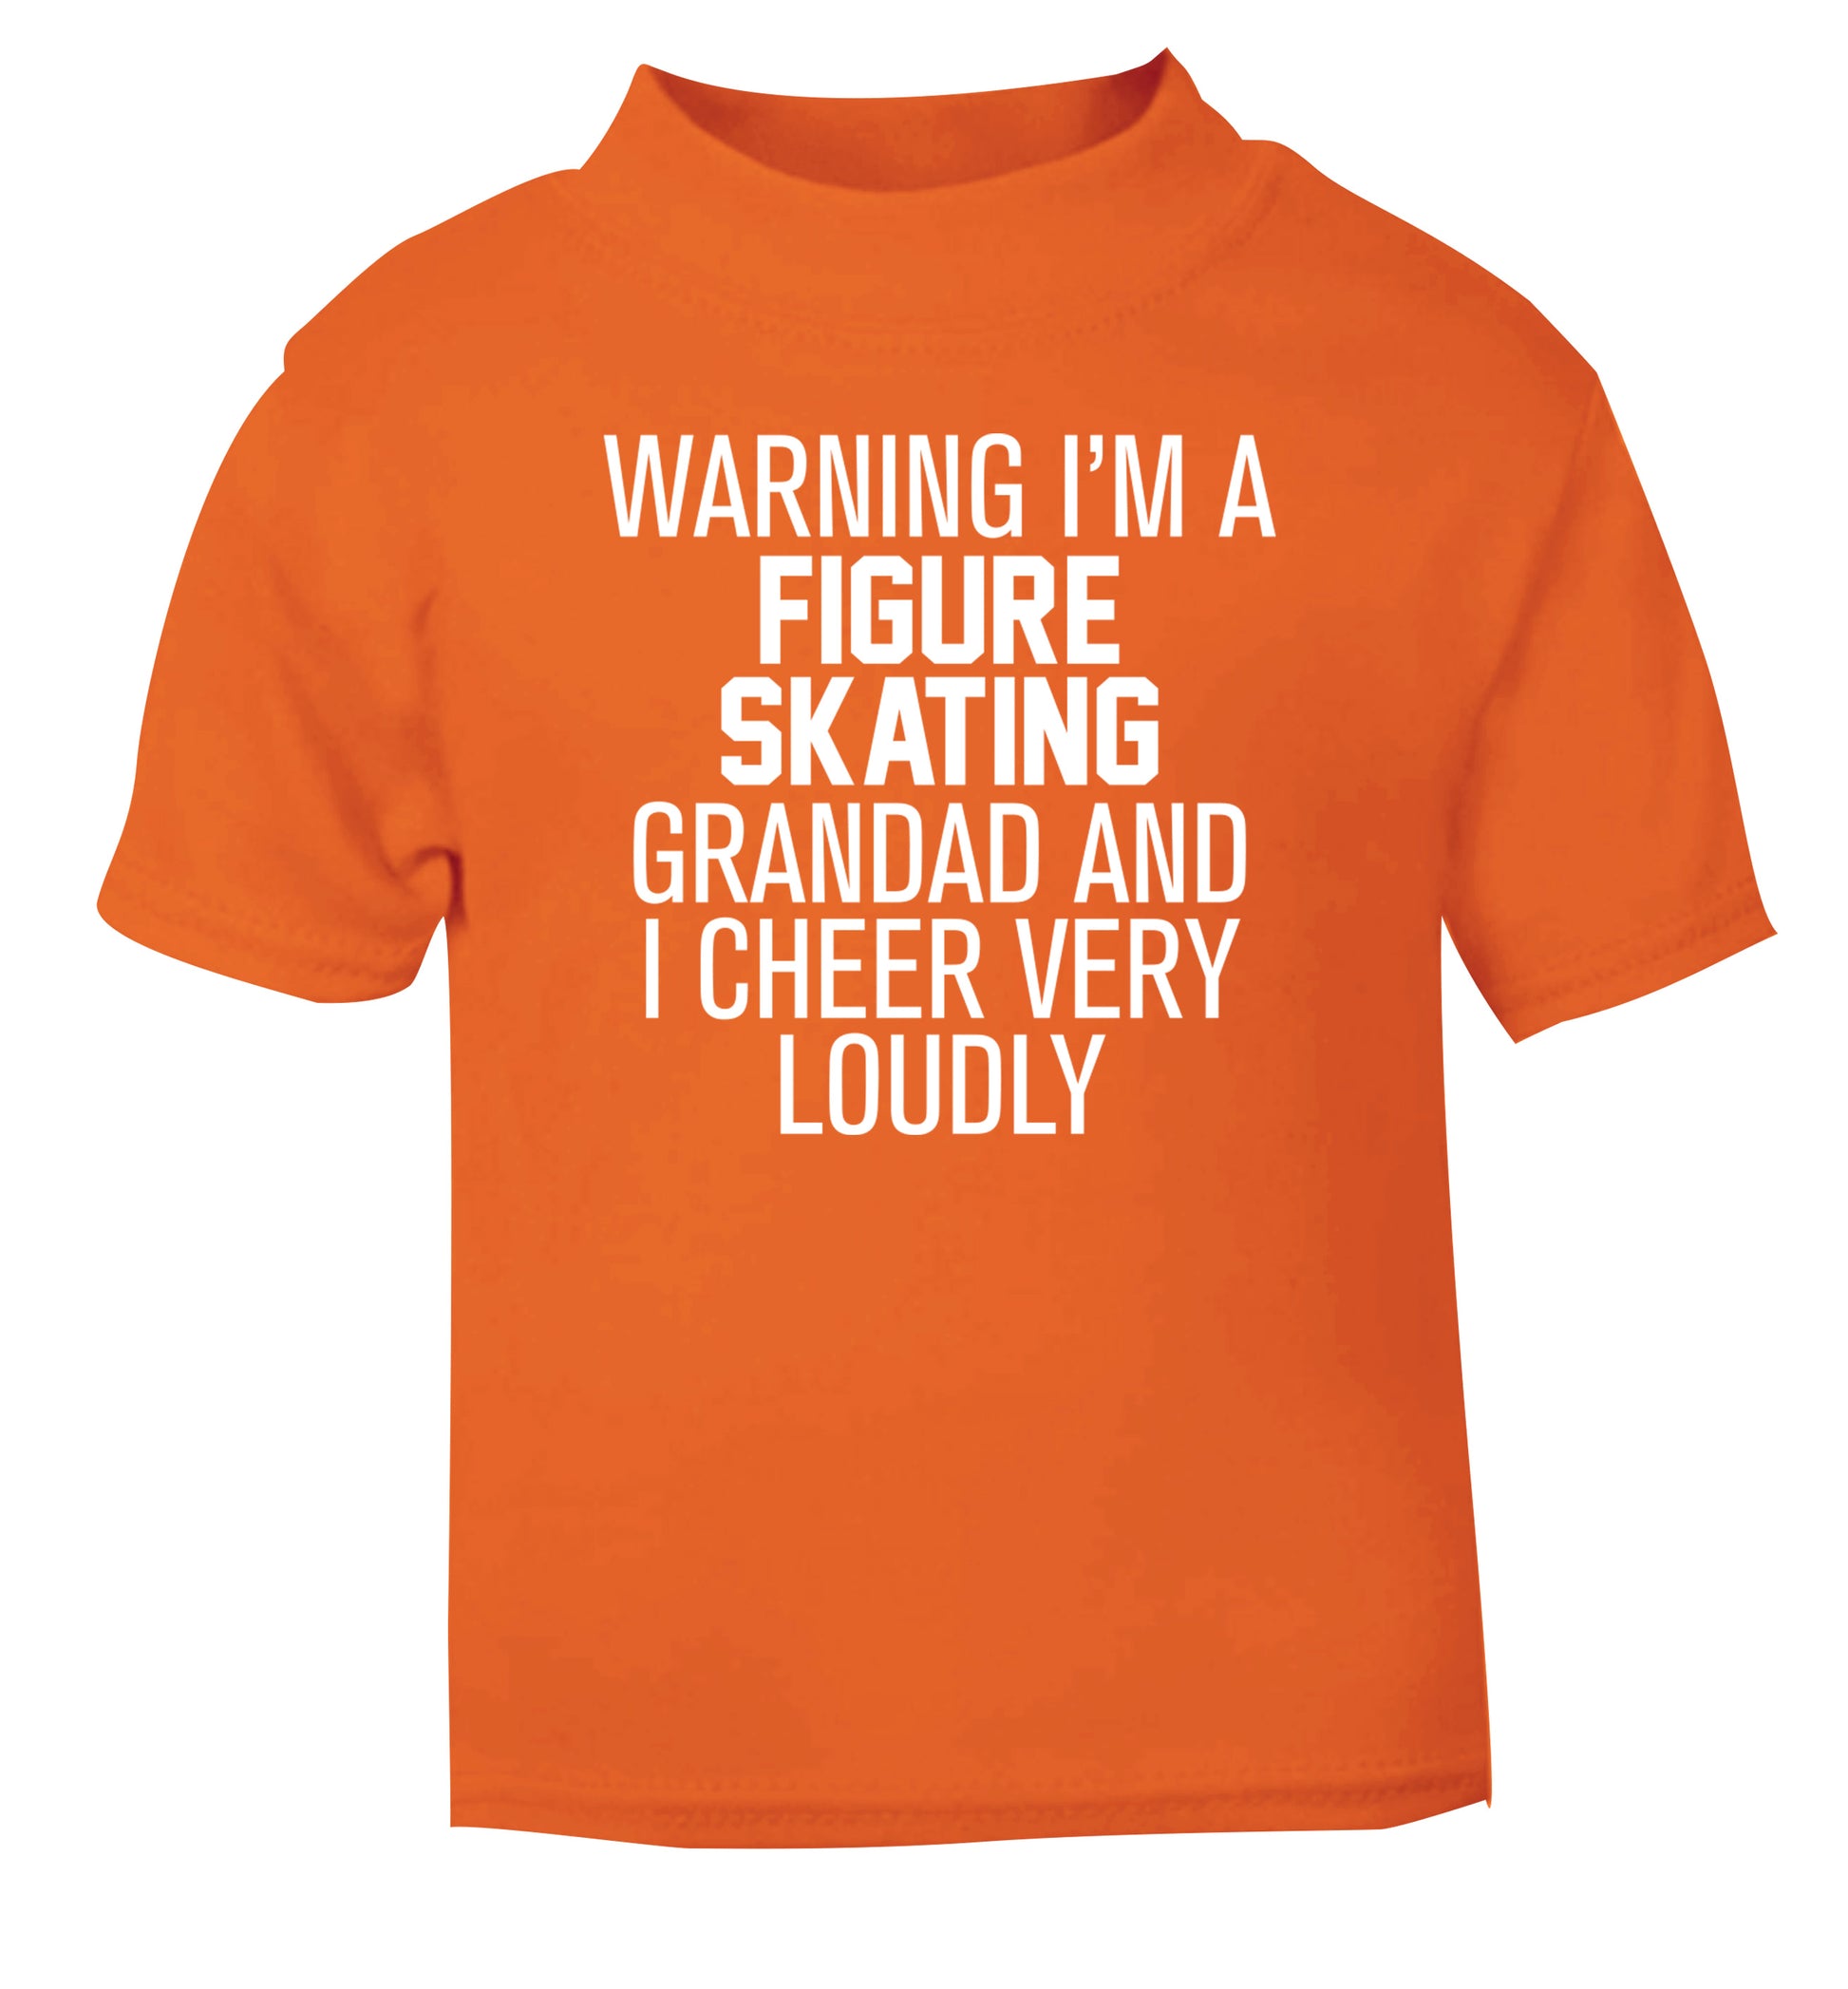 Warning I'm a figure skating grandad and I cheer very loudly orange Baby Toddler Tshirt 2 Years